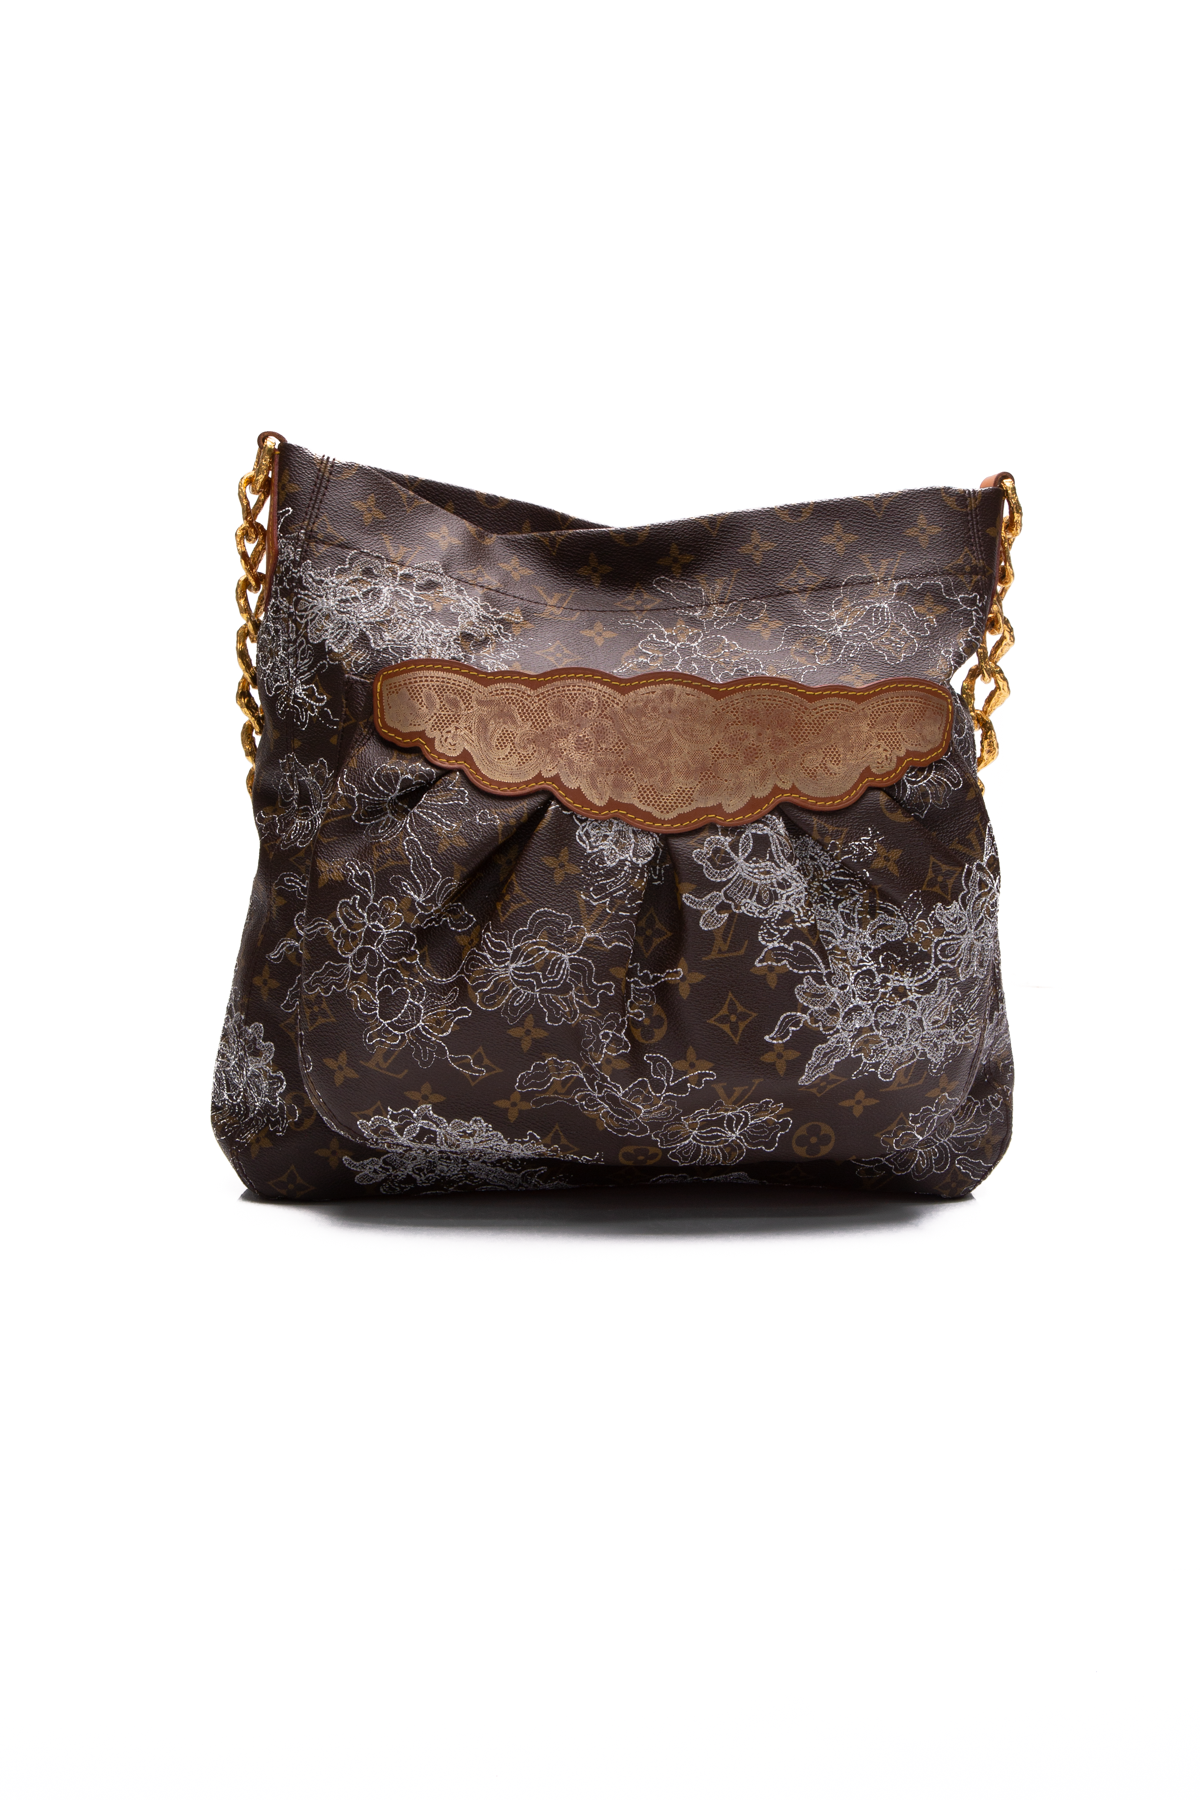 Louis Vuitton Limited Edition Monogram Dentell Speedy 30 Satchel Tote  Handbag 